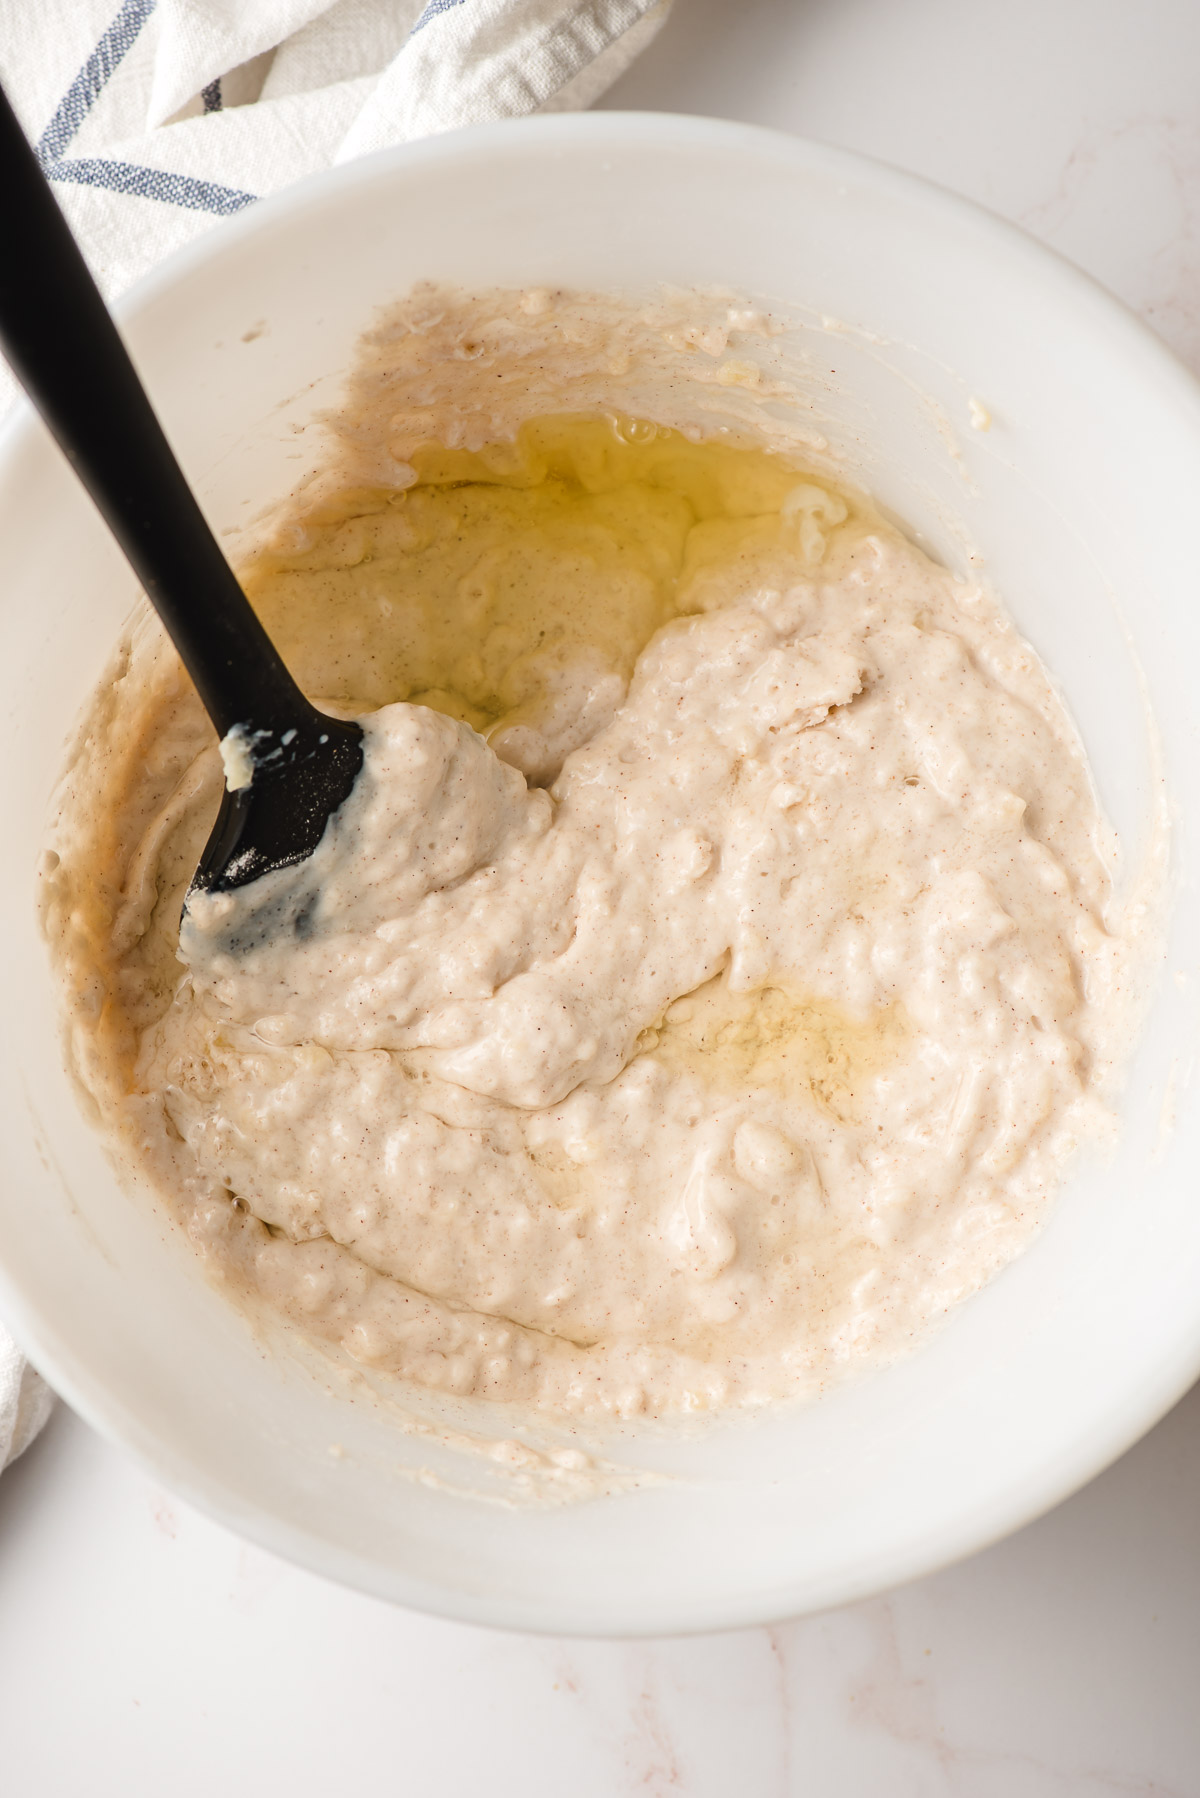 Spatula stirring egg white into pancake batter.